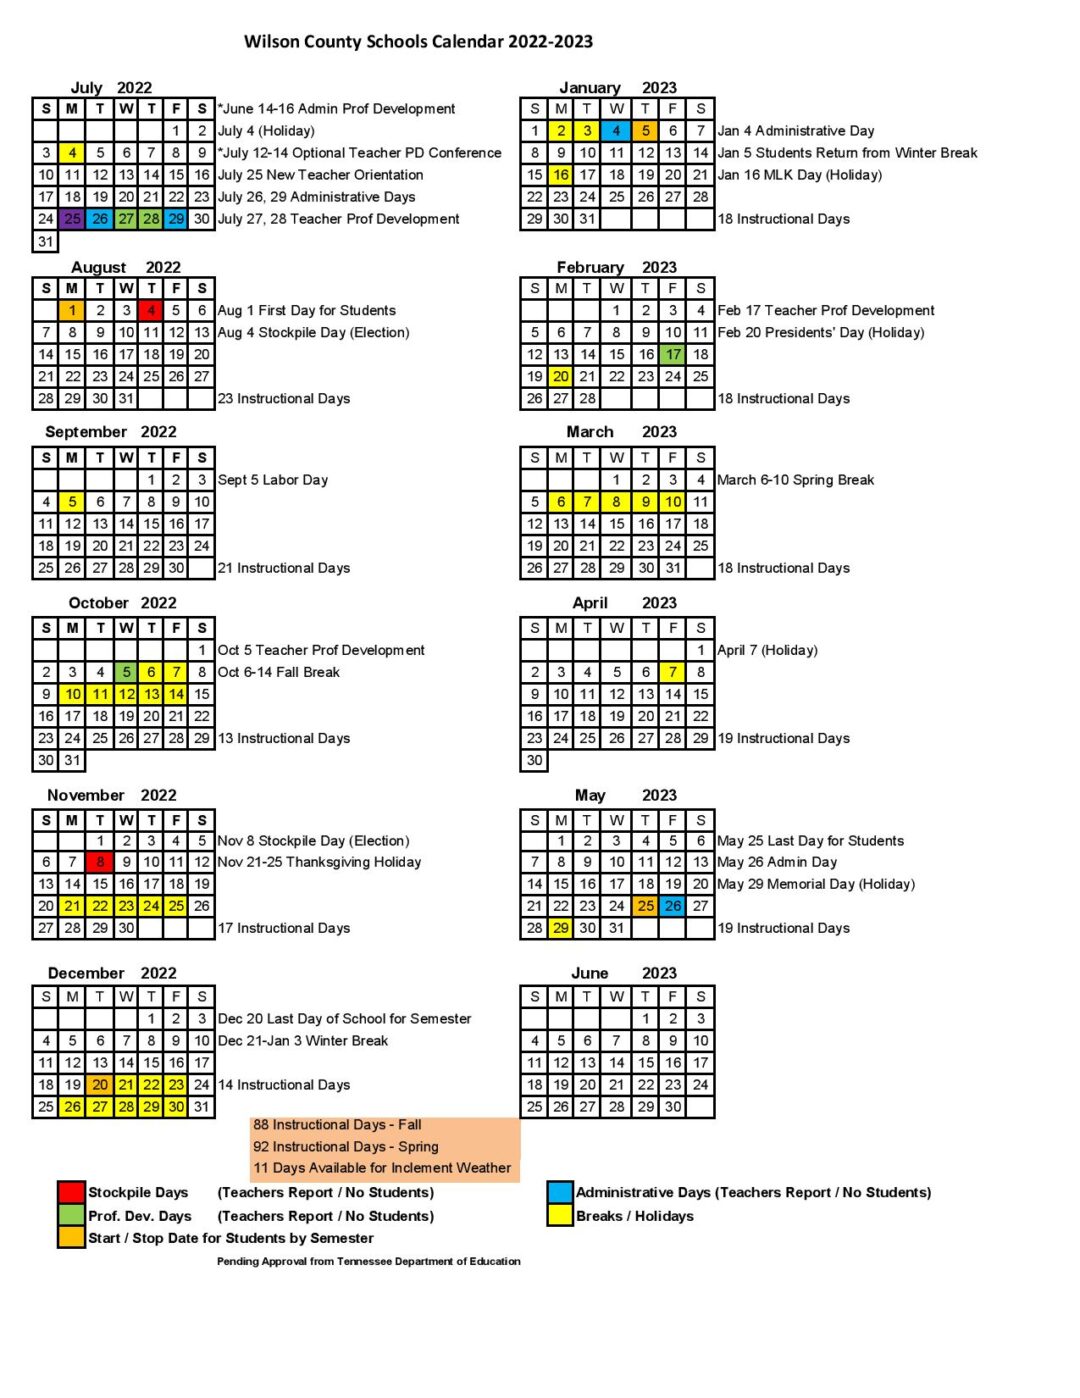 wilson-county-schools-calendar-2022-2023-in-pdf